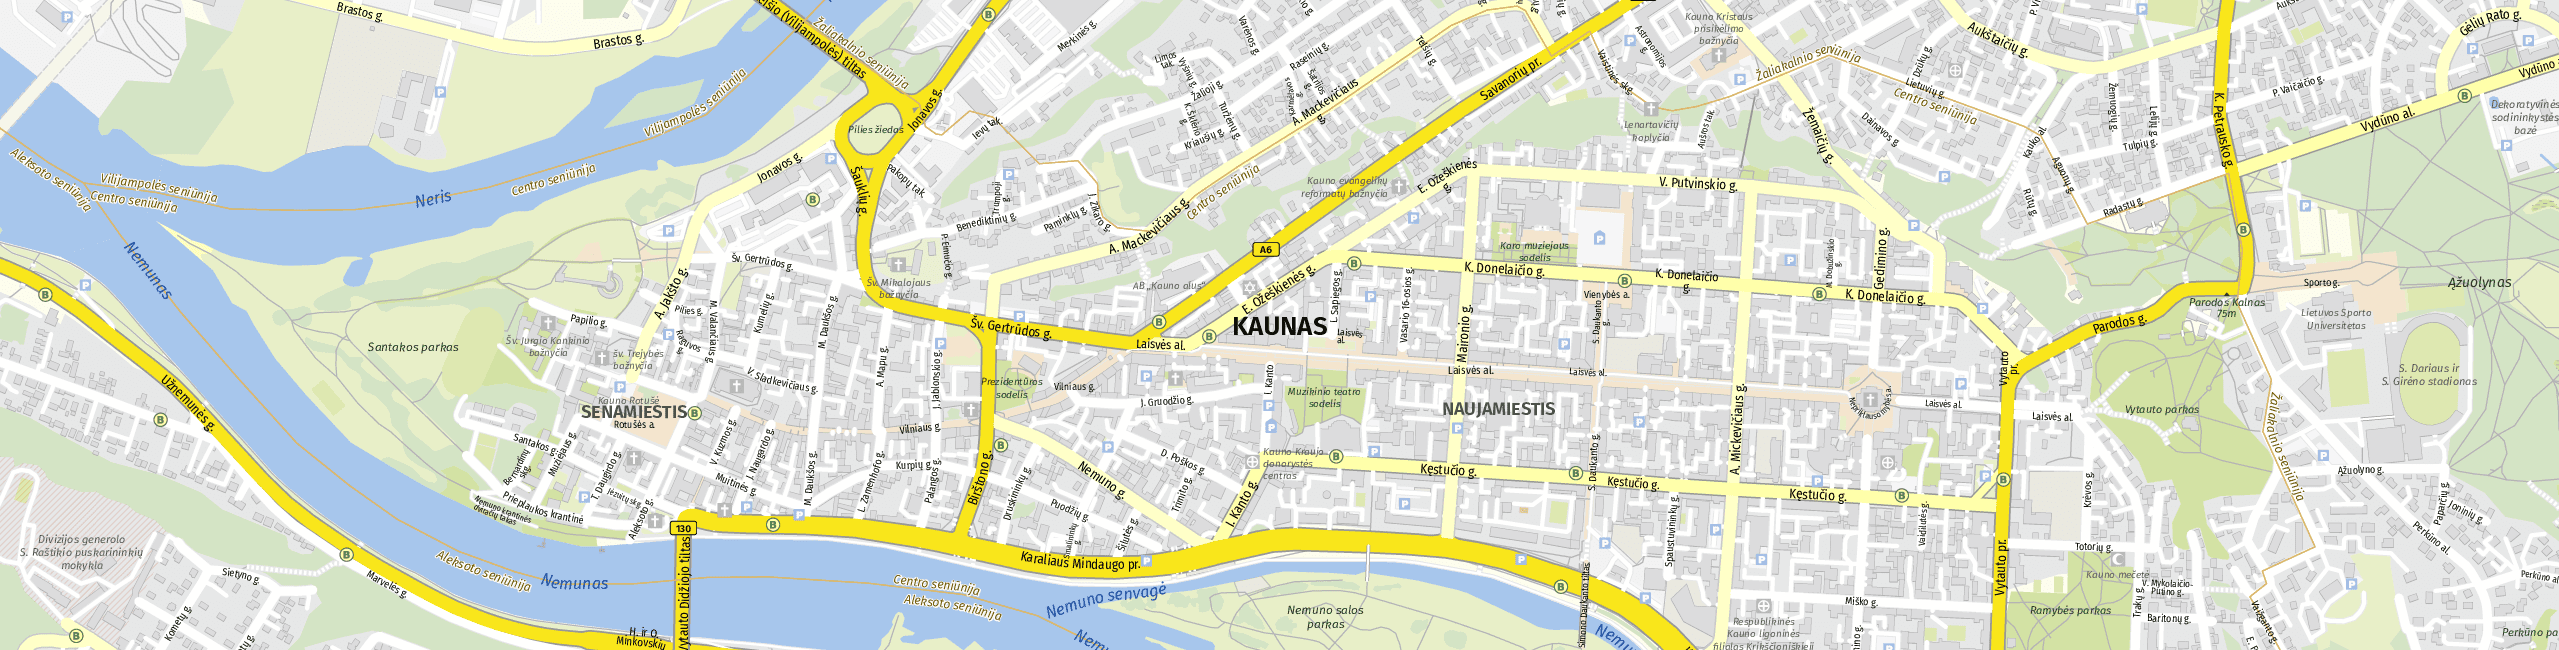 Stadtplan Kaunas zum Downloaden.